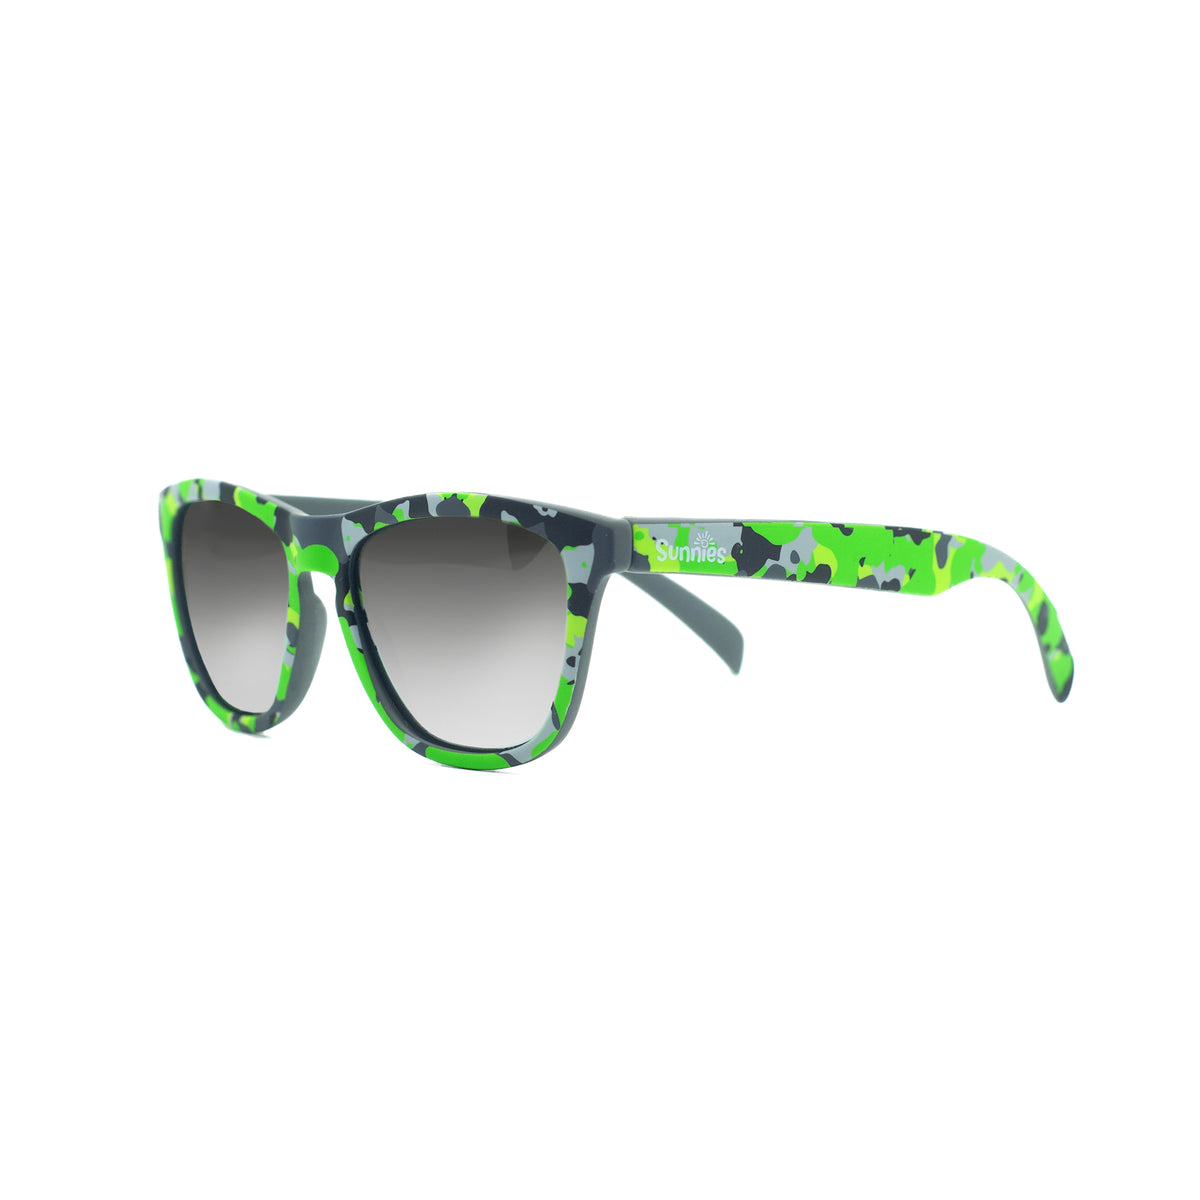 Sunnies kids polarized sunglasses in a green cam print